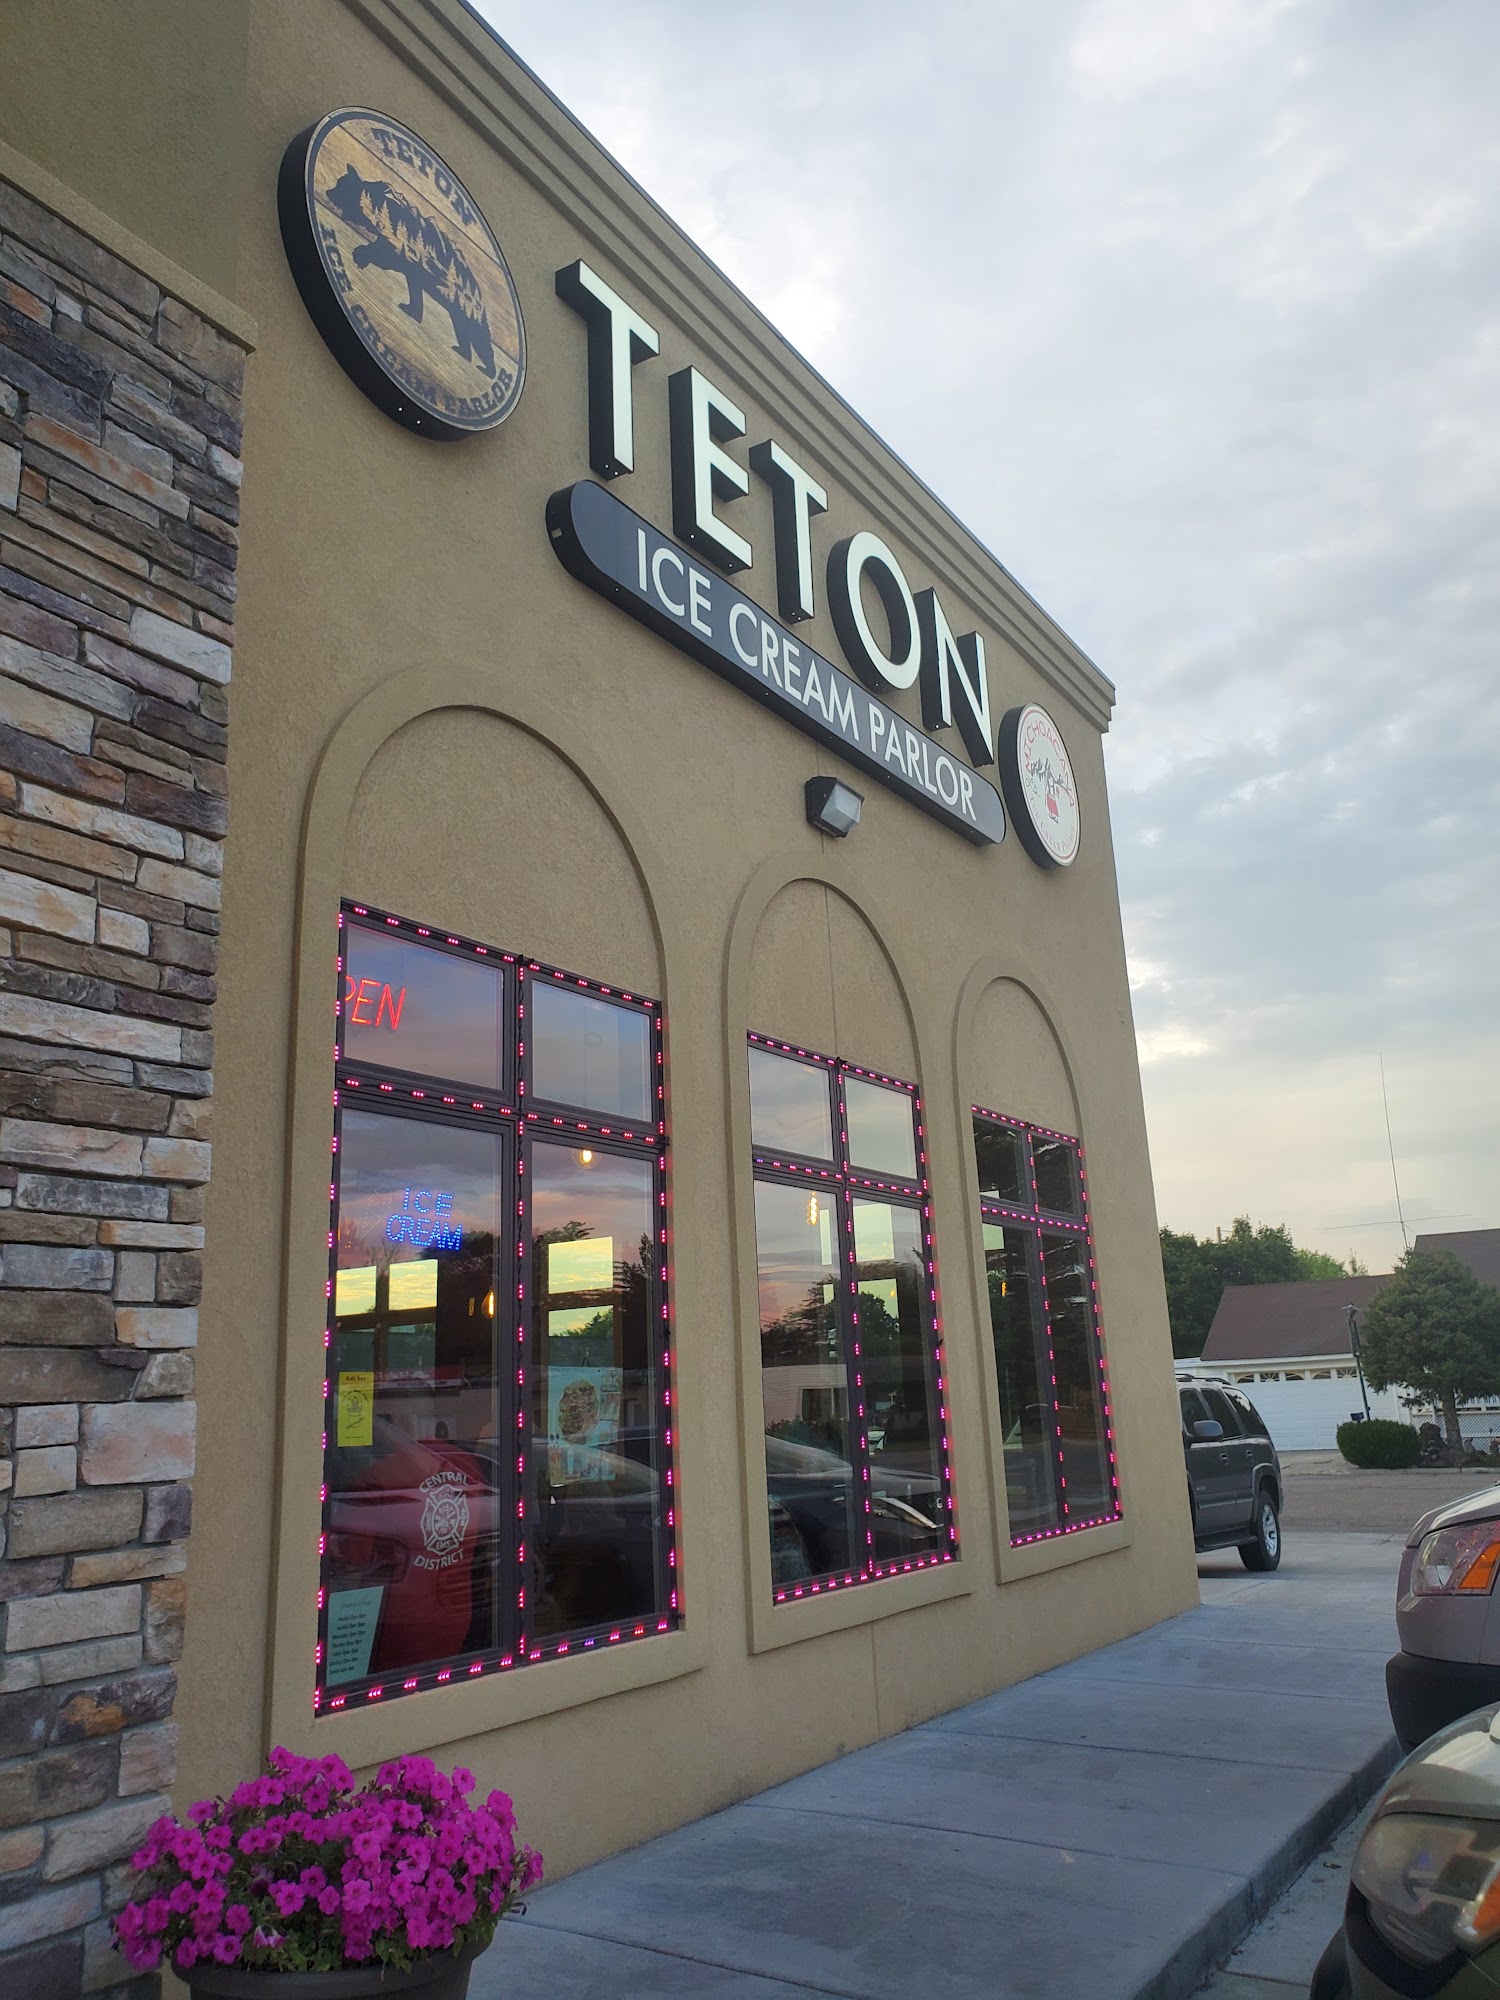 Teton Ice Cream Parlor